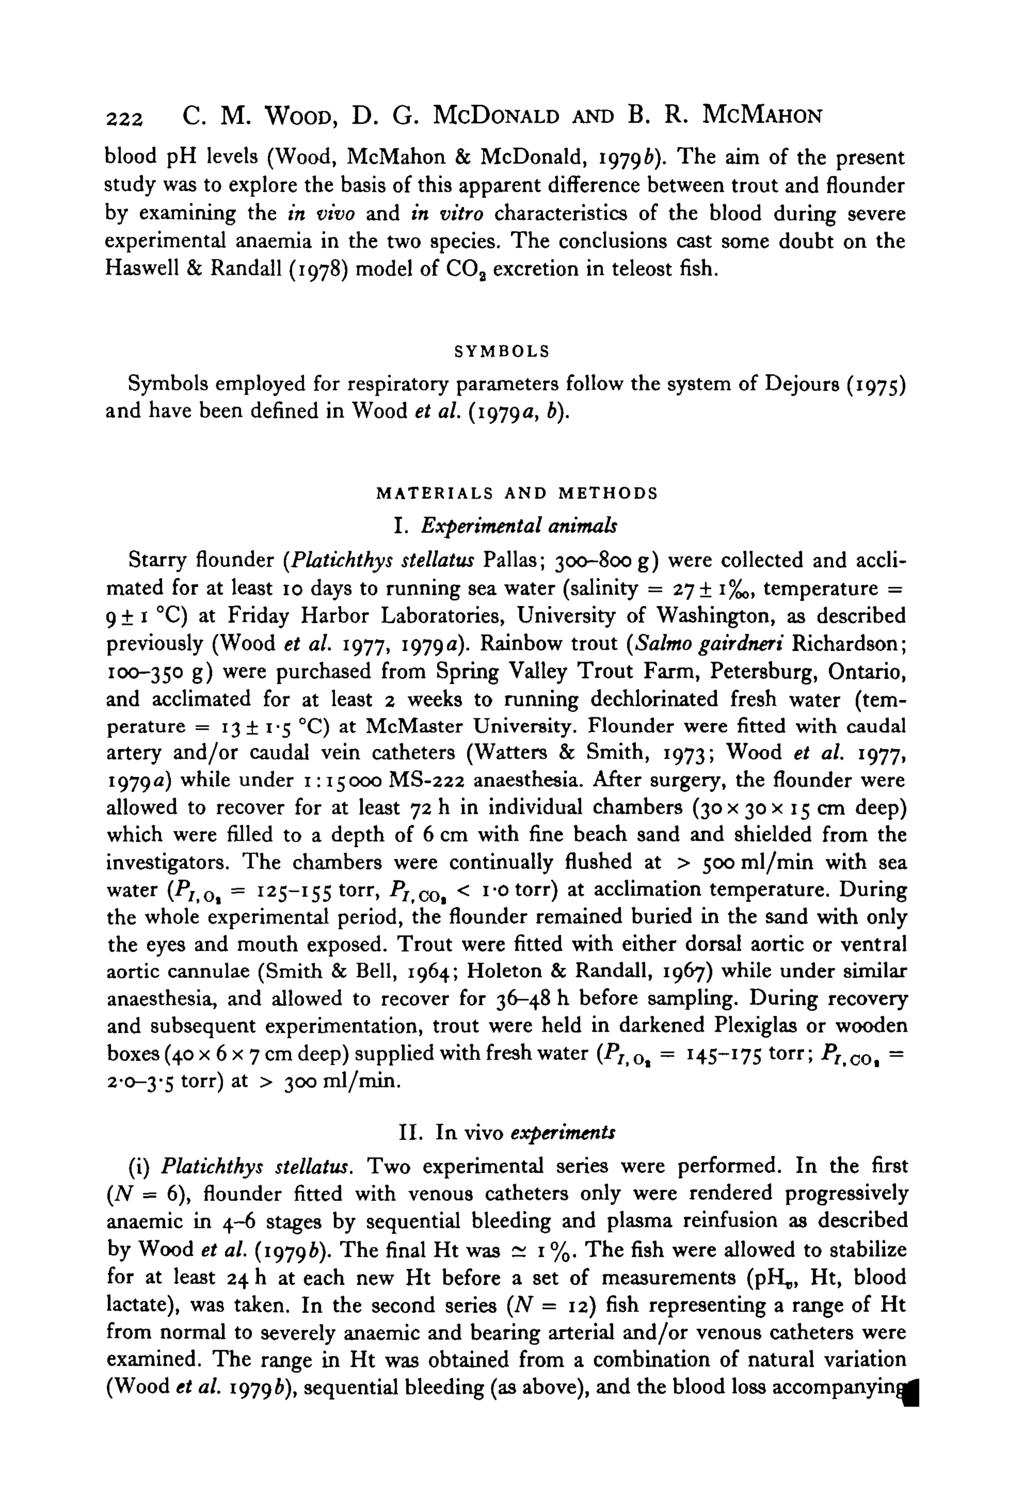 222 C. M. WOOD, D. G. MCDONALD AND B. R. MCMAHON blood ph levels (Wood, McMahon & McDonald, 19796).